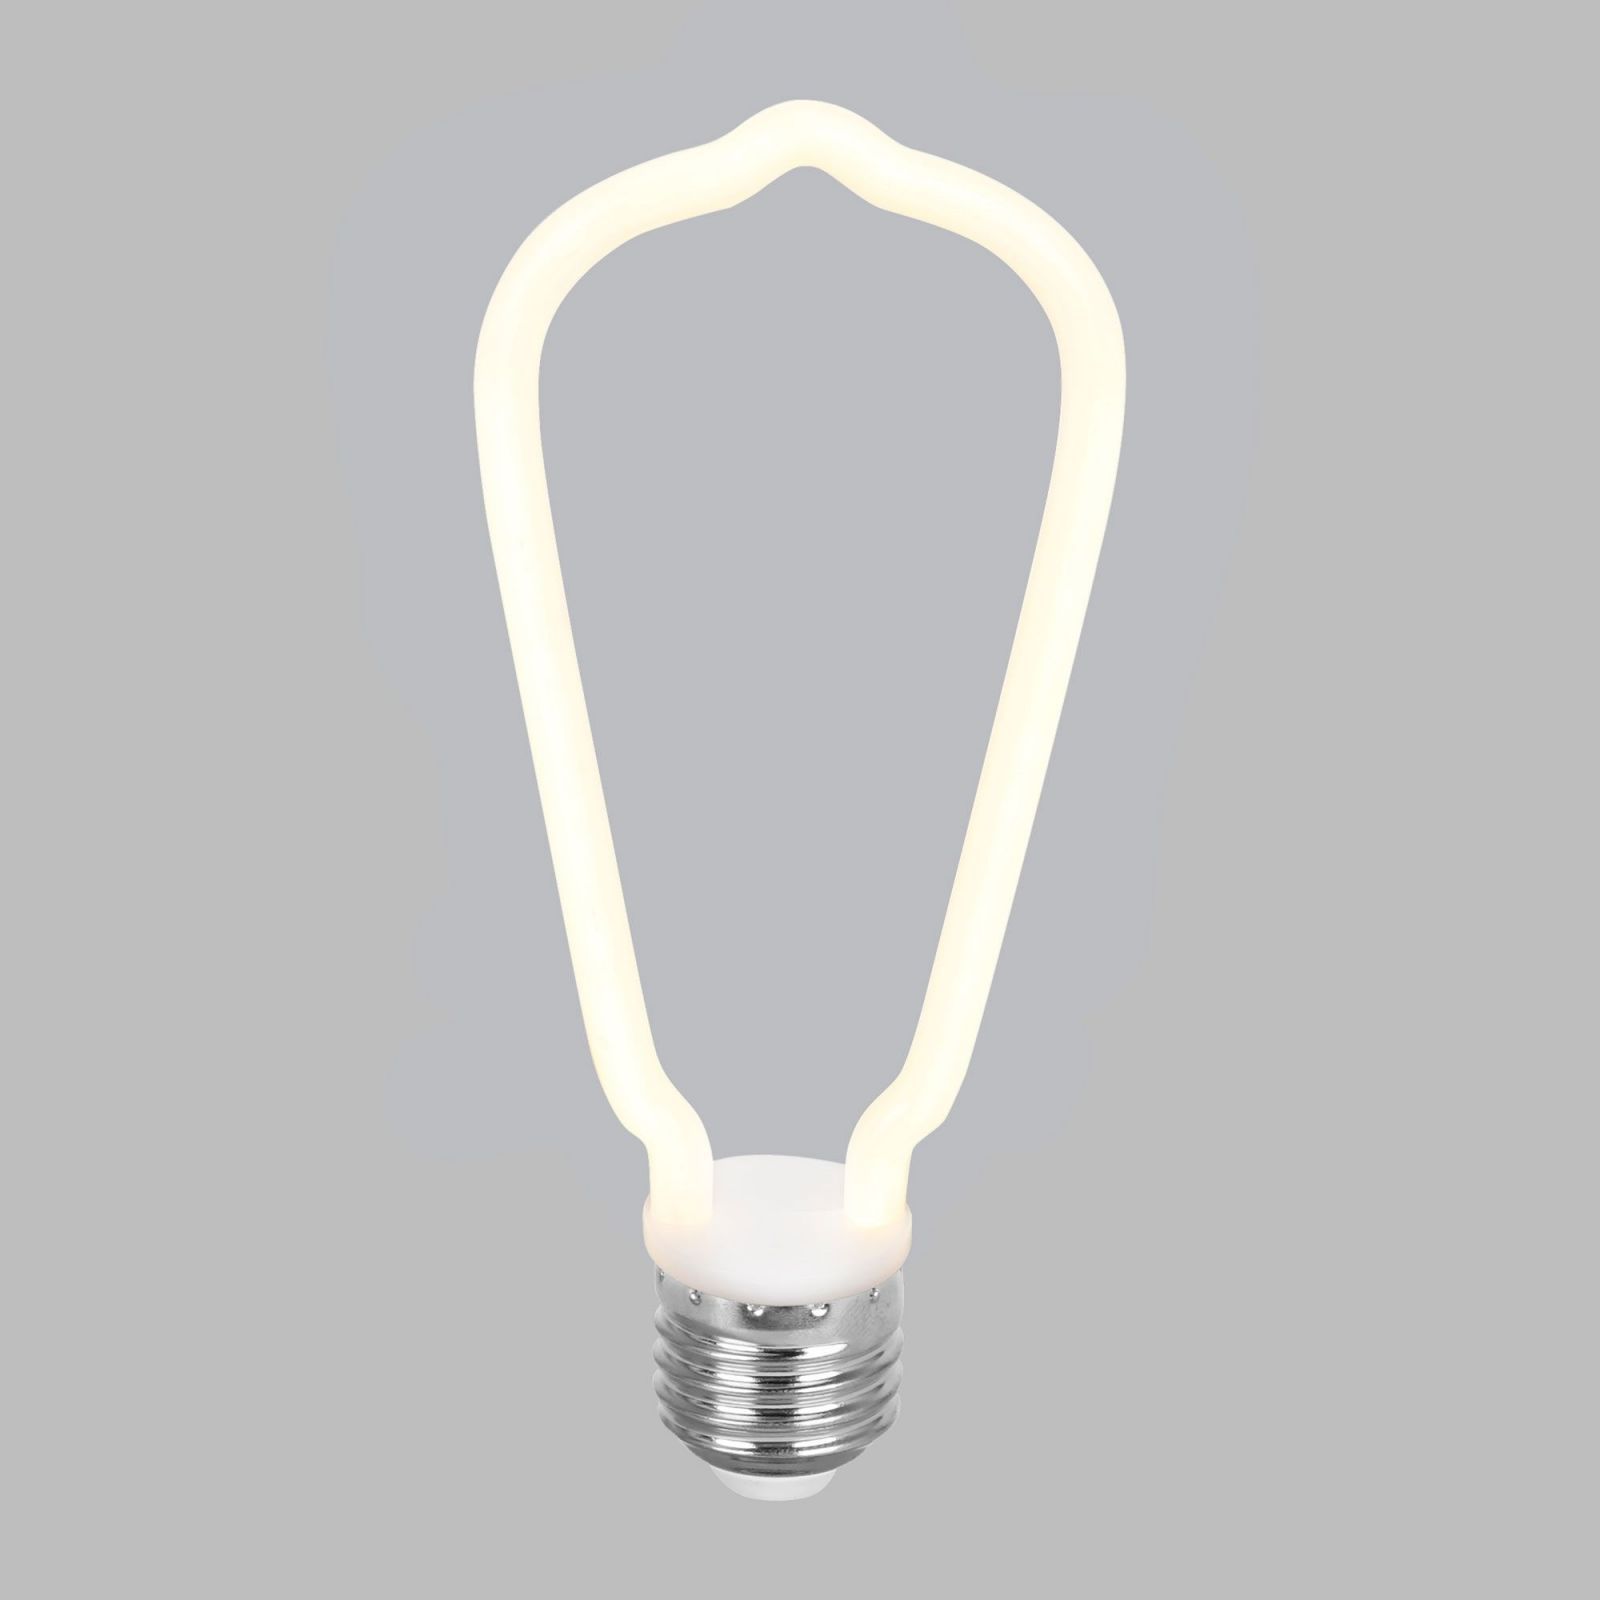 Декоративная контурная лампа Decor filament 4W 2700K E27